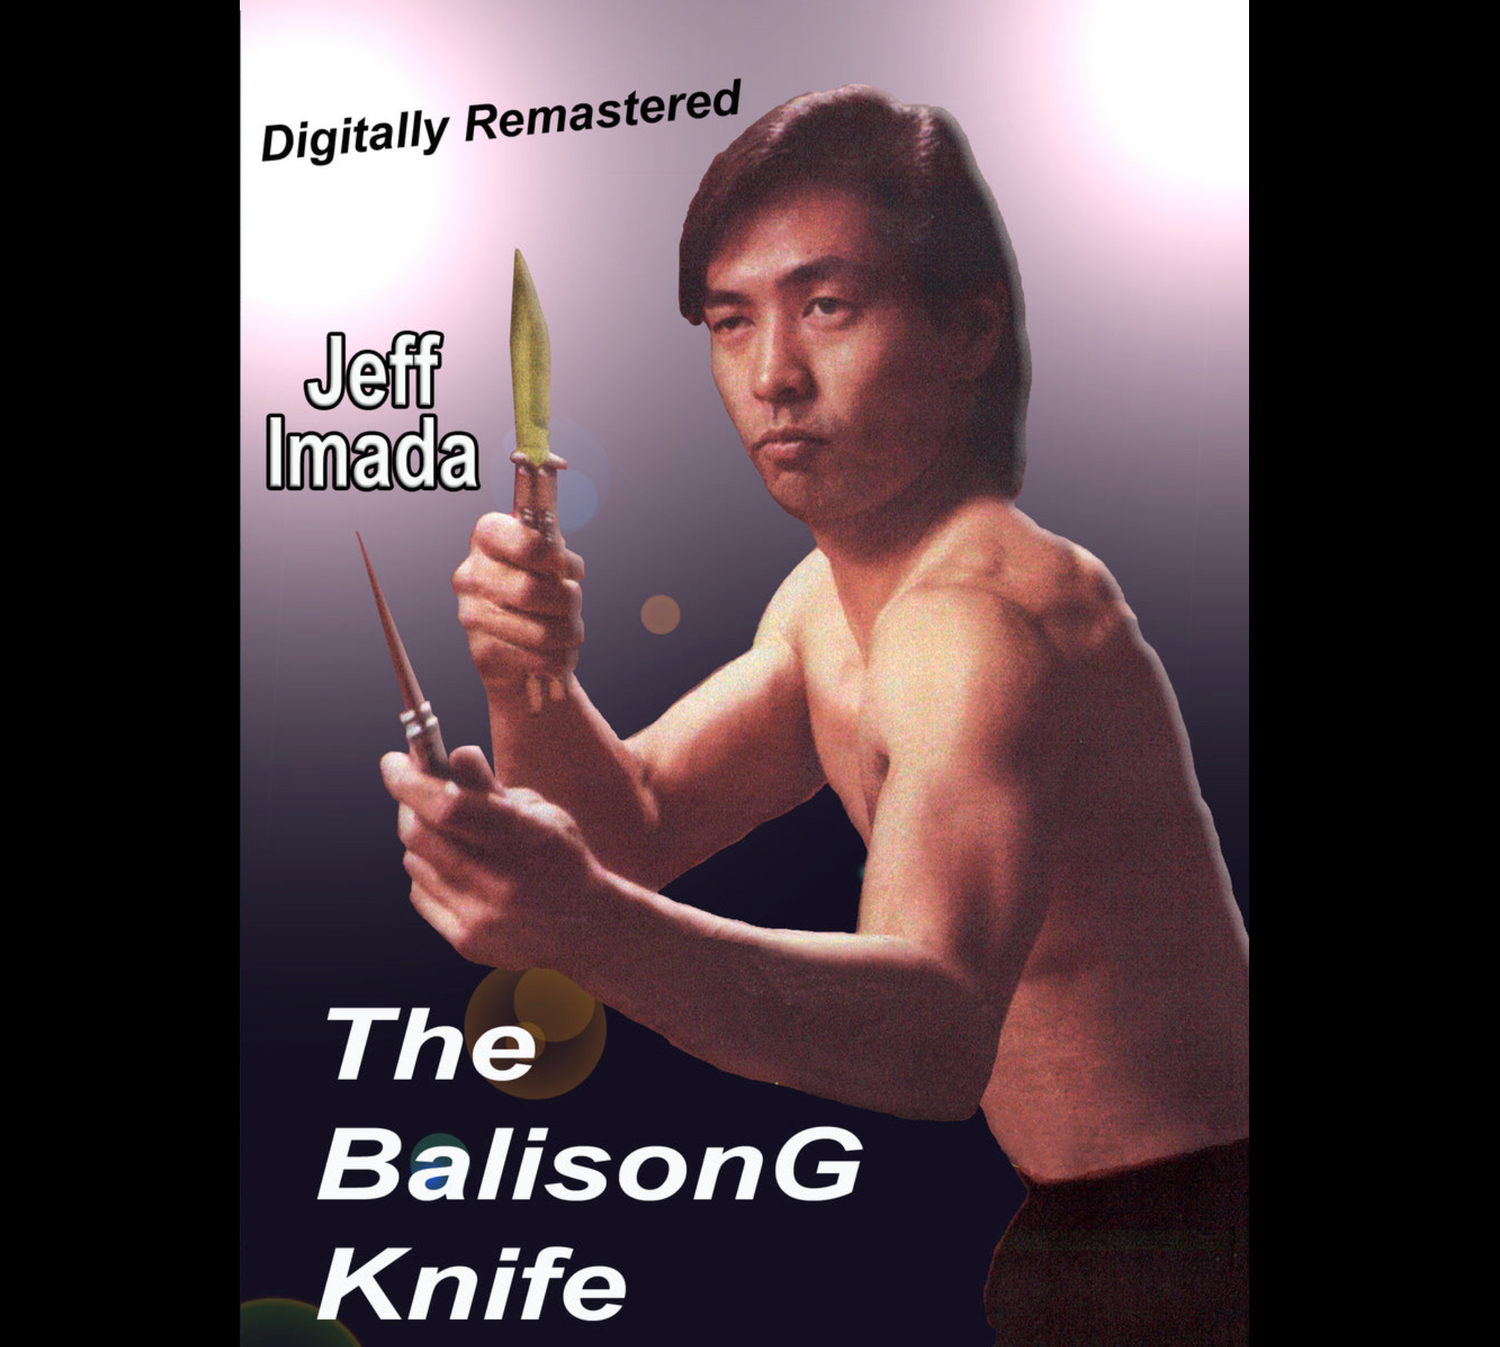 The Balisong Knife by Jeff Imada (On Demand)